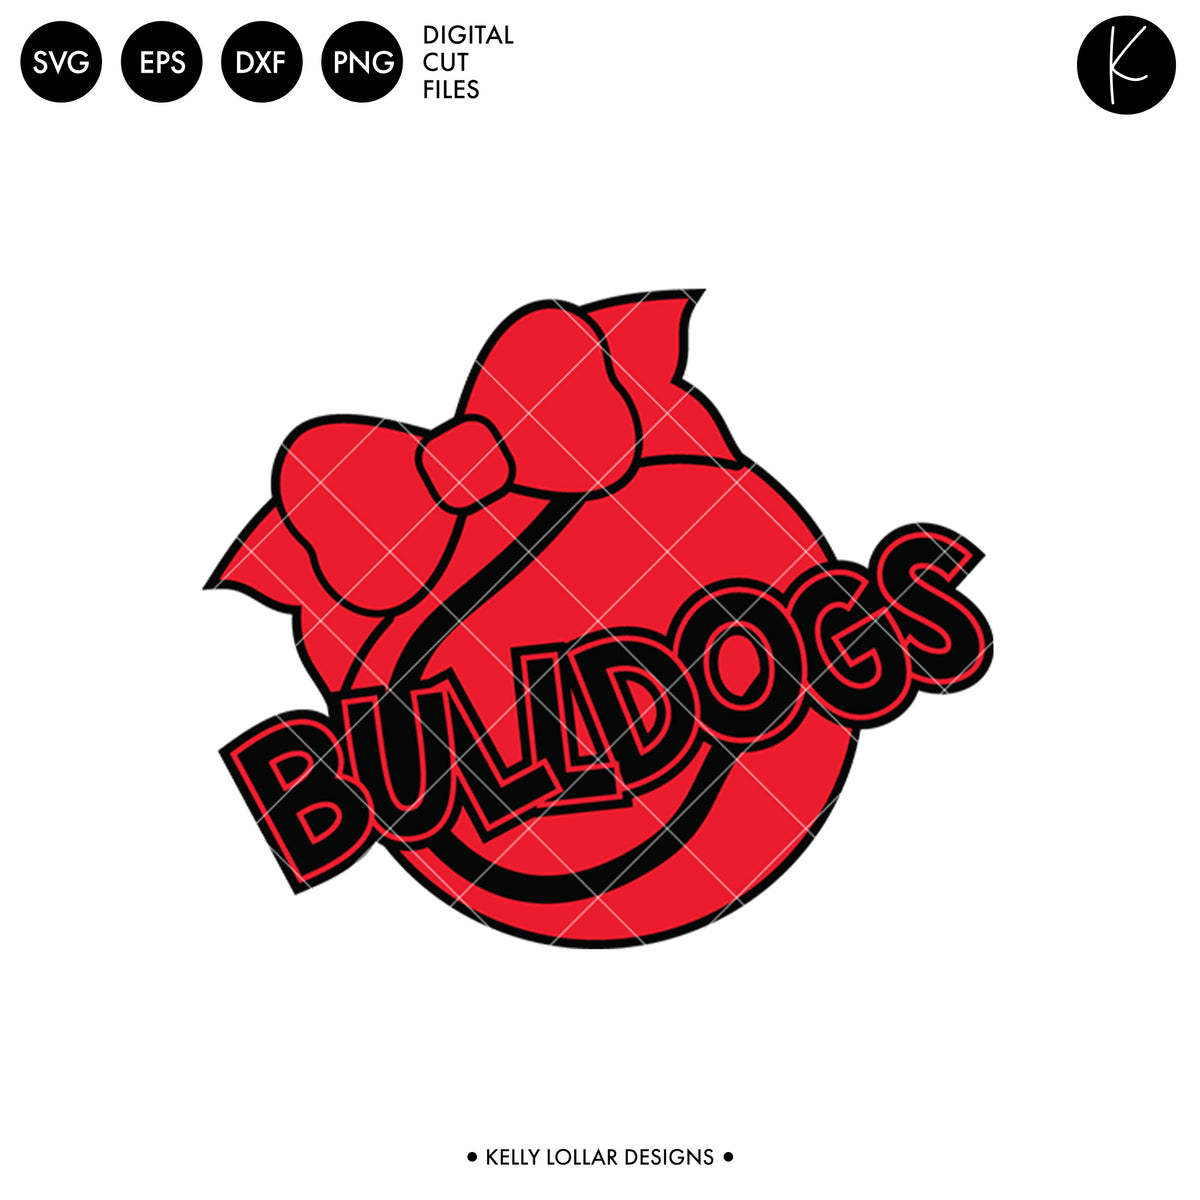 Bulldogs Tennis Bundle | SVG DXF EPS PNG Cut Files